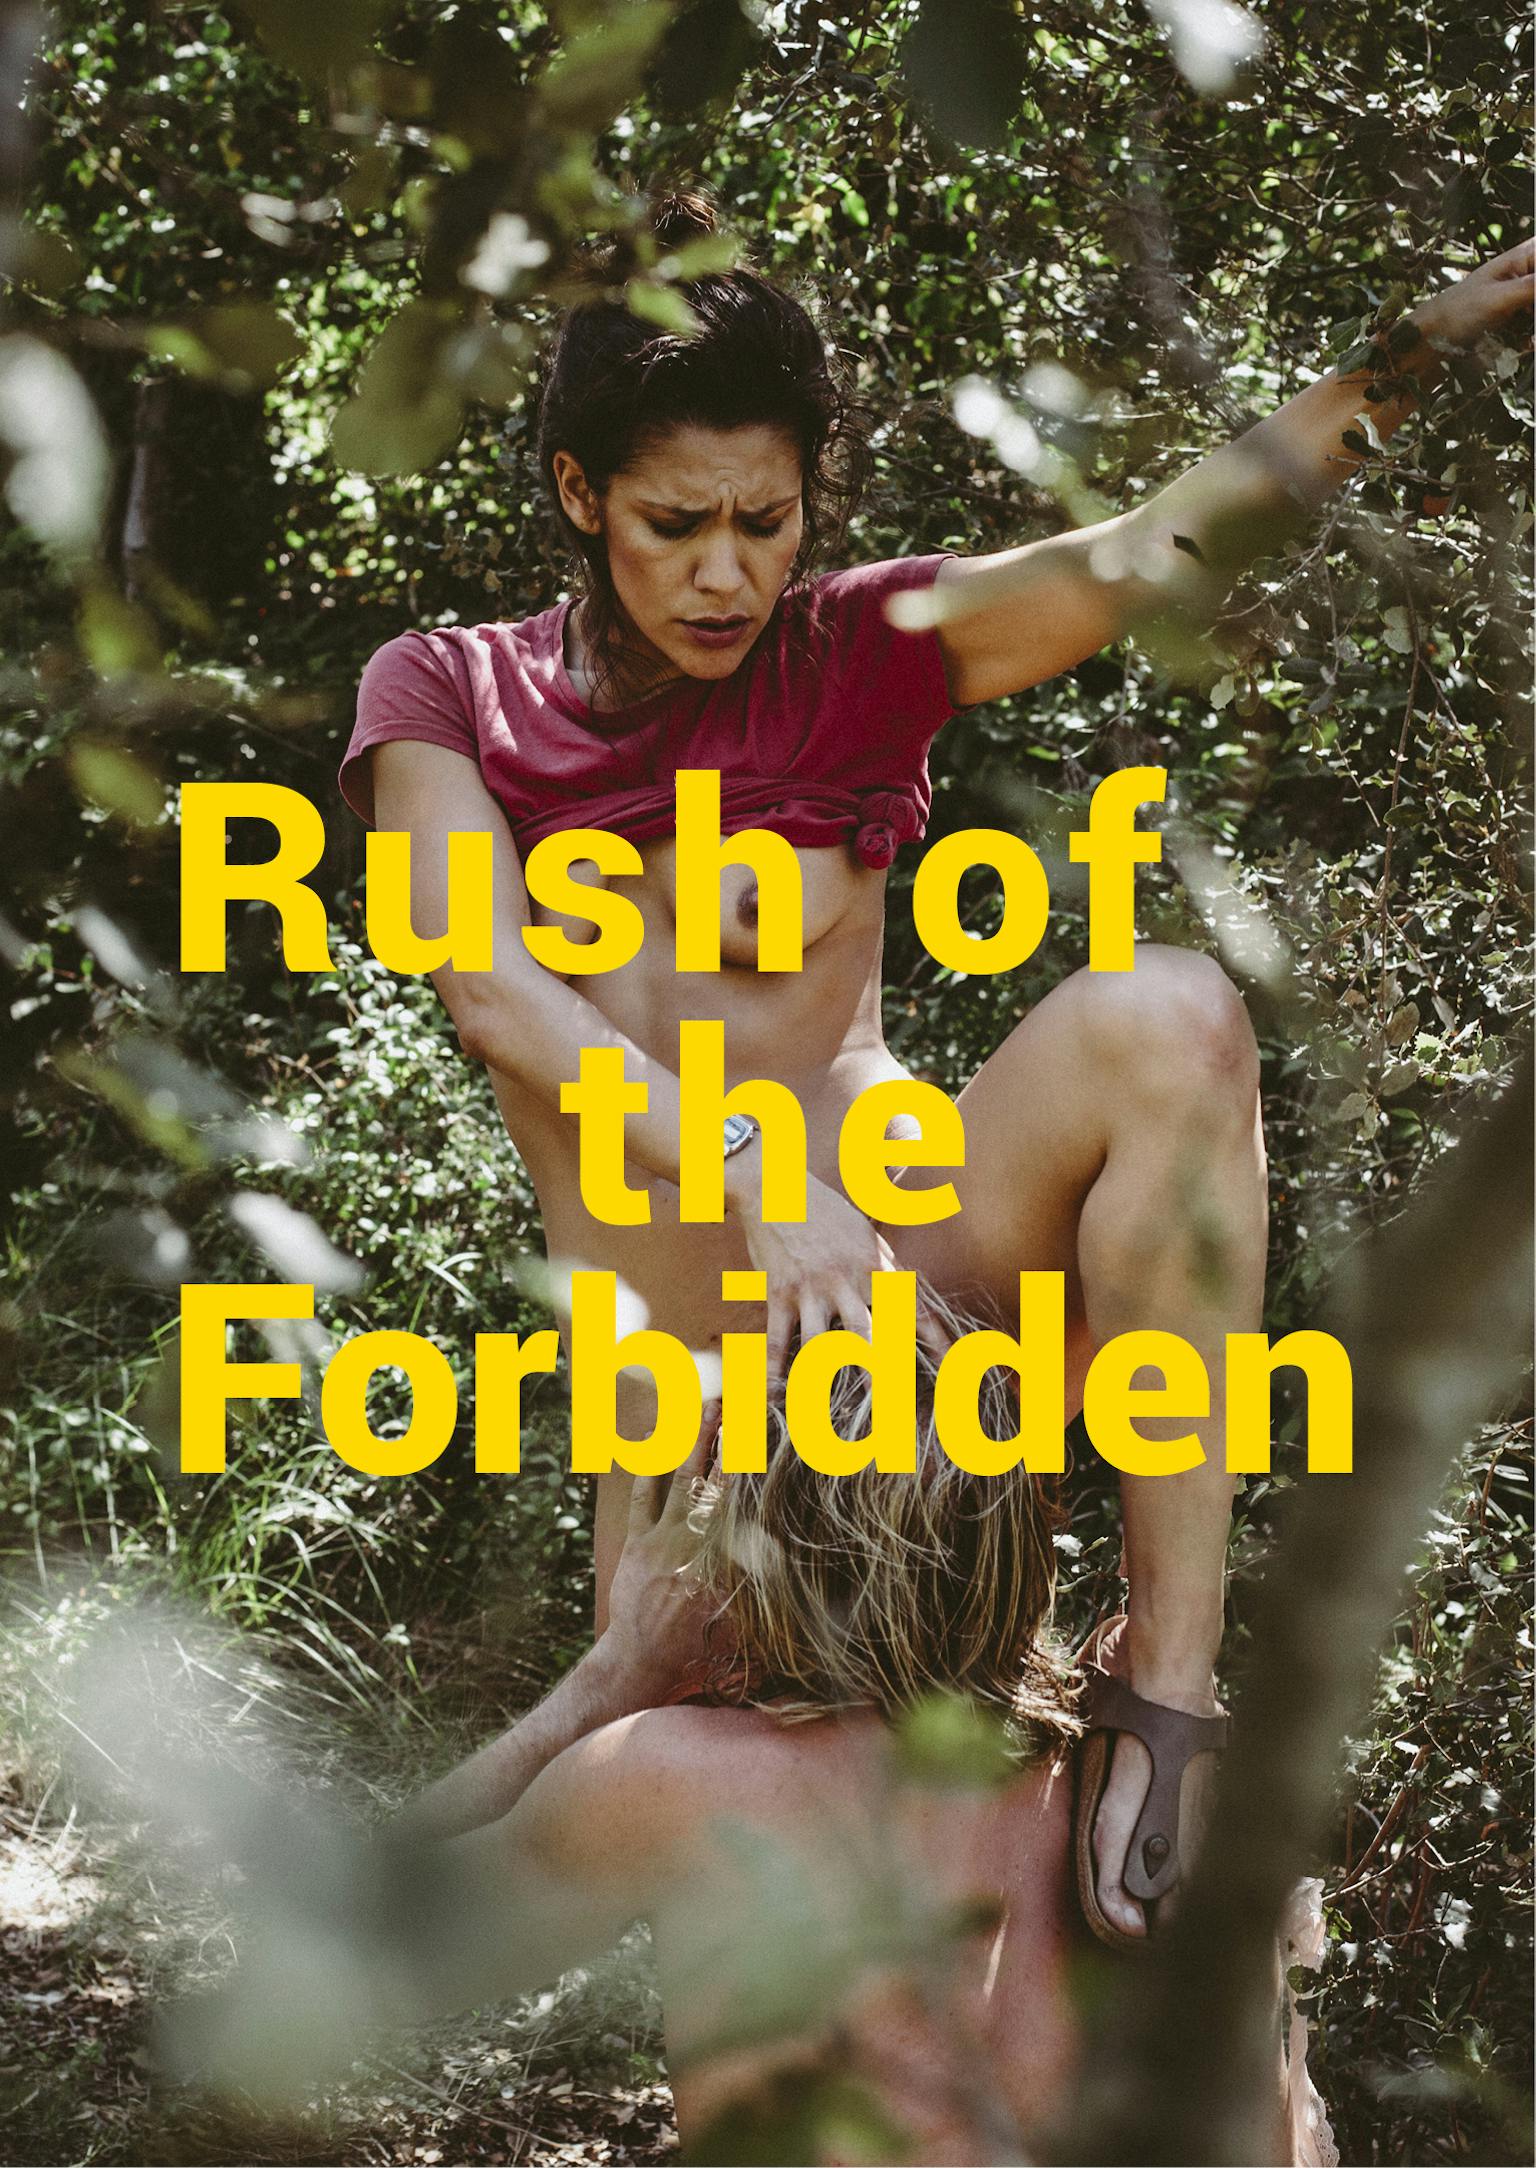 Rush of the Forbidden